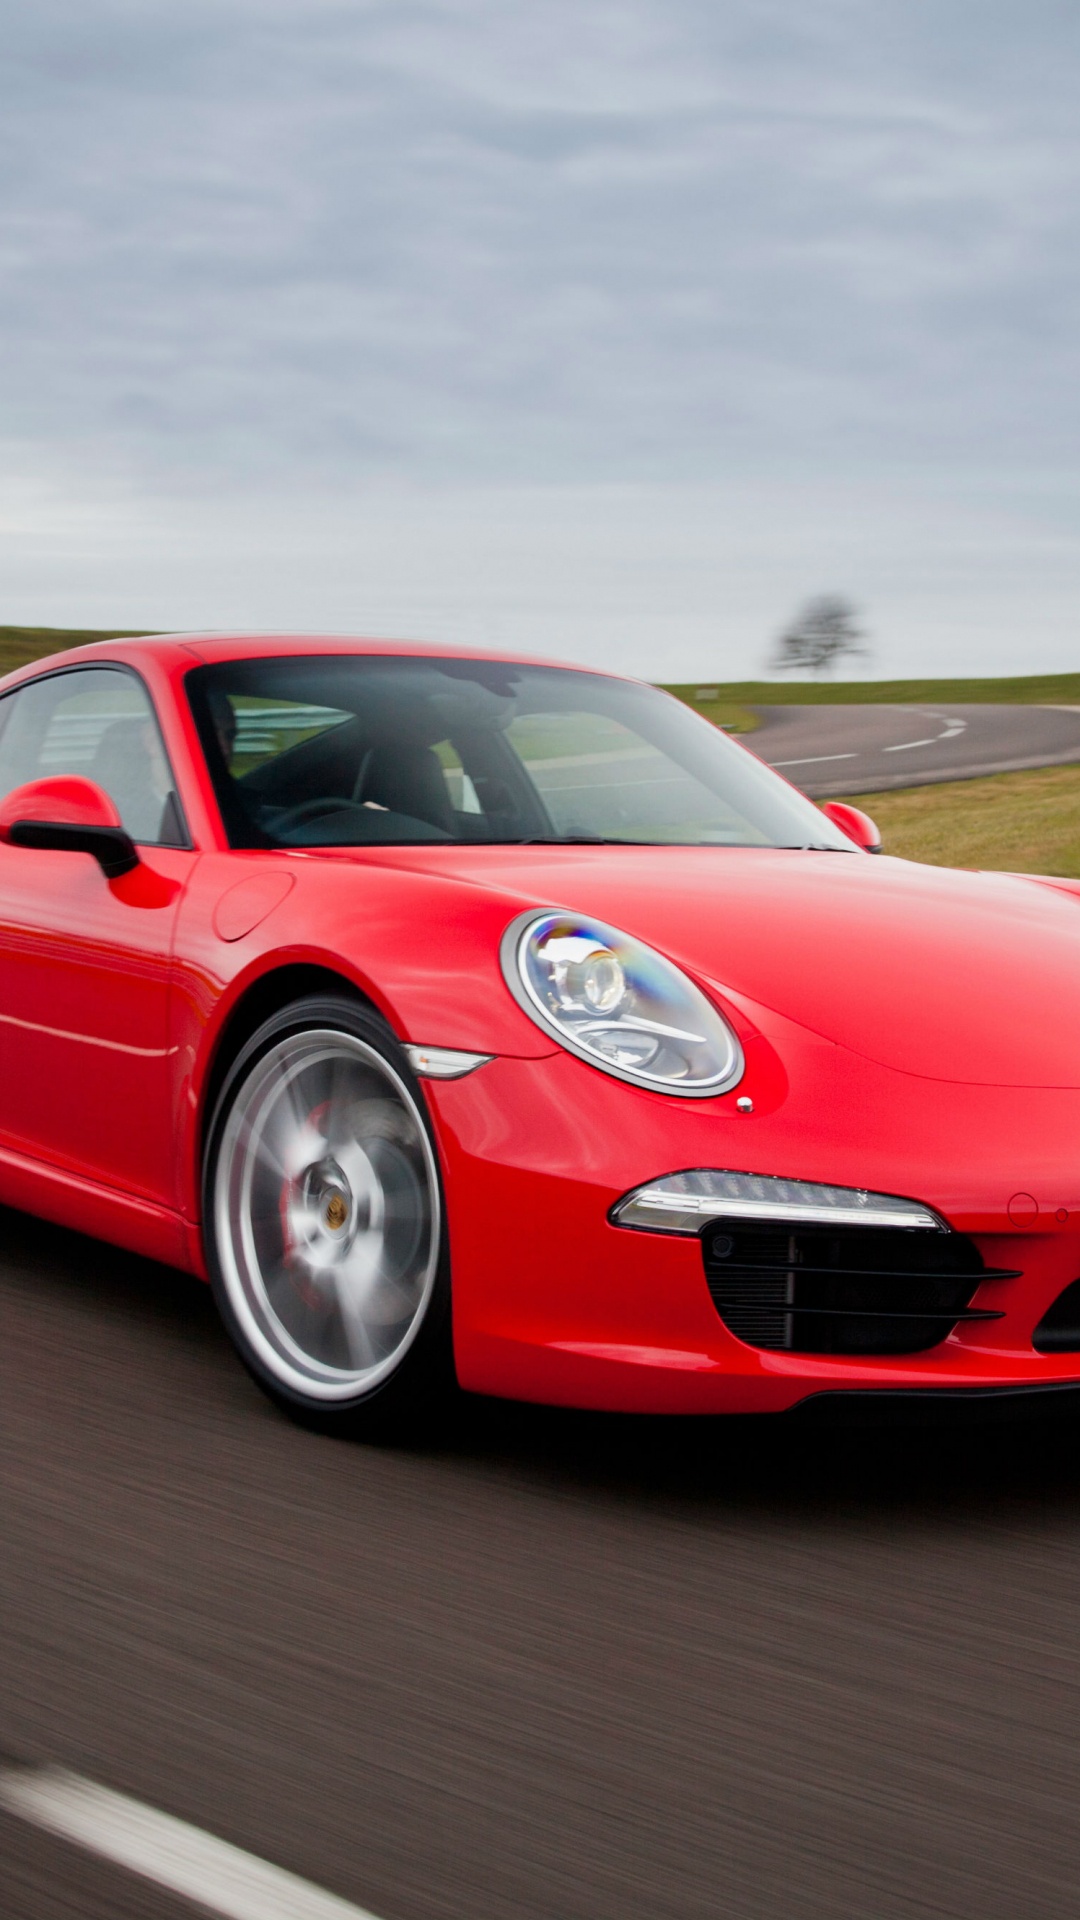 Red Porsche 911 on Road During Daytime. Wallpaper in 1080x1920 Resolution